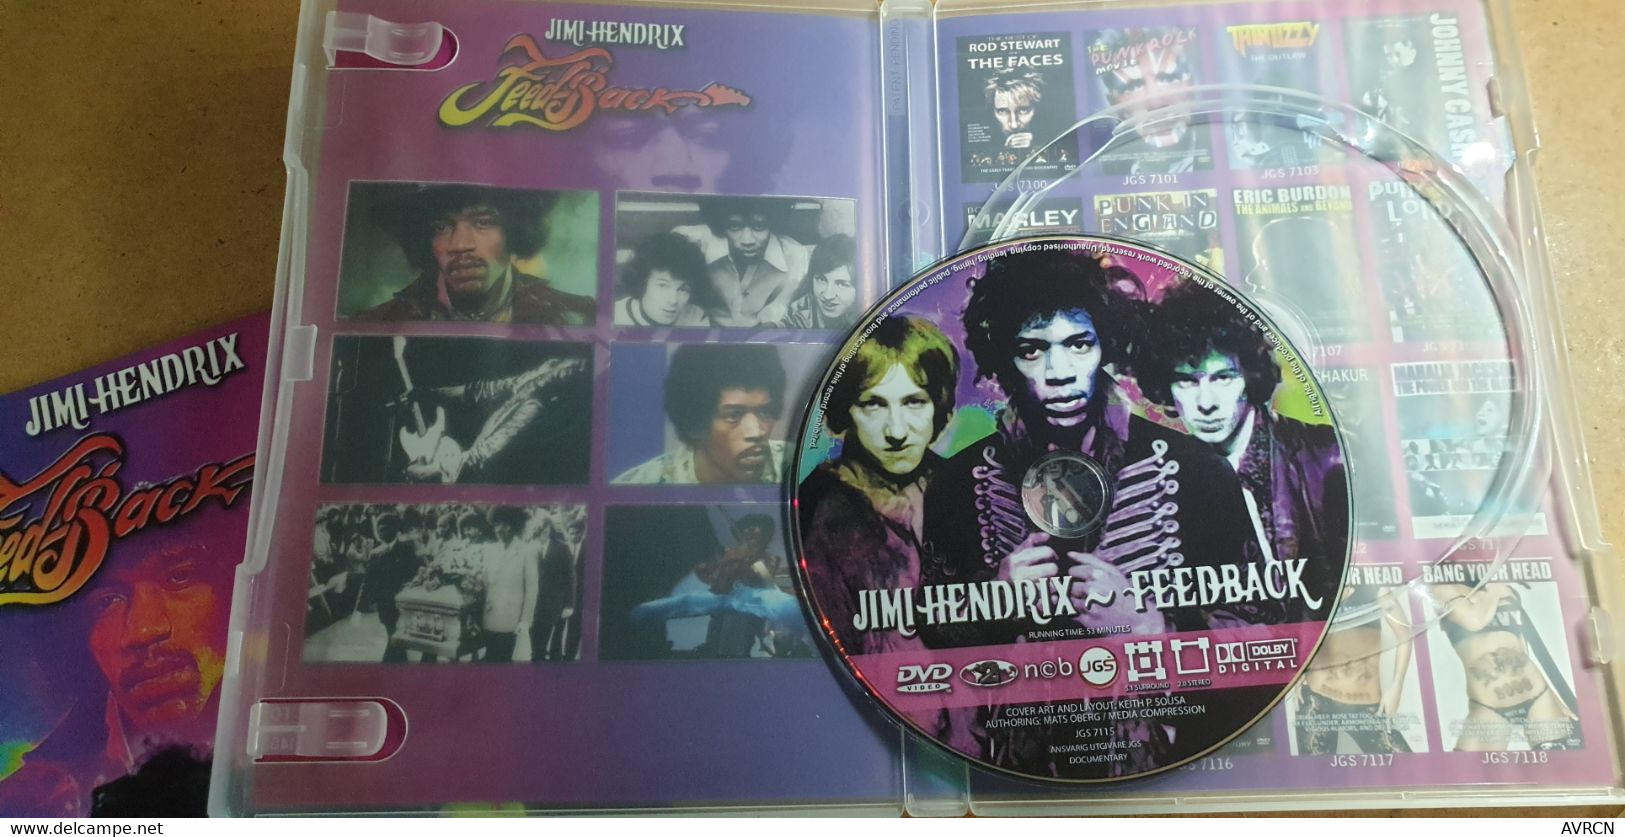 JIMI HENDRIX - FEEDBACK - DVD « NCB-JGS 7115 ». - Musik-DVD's